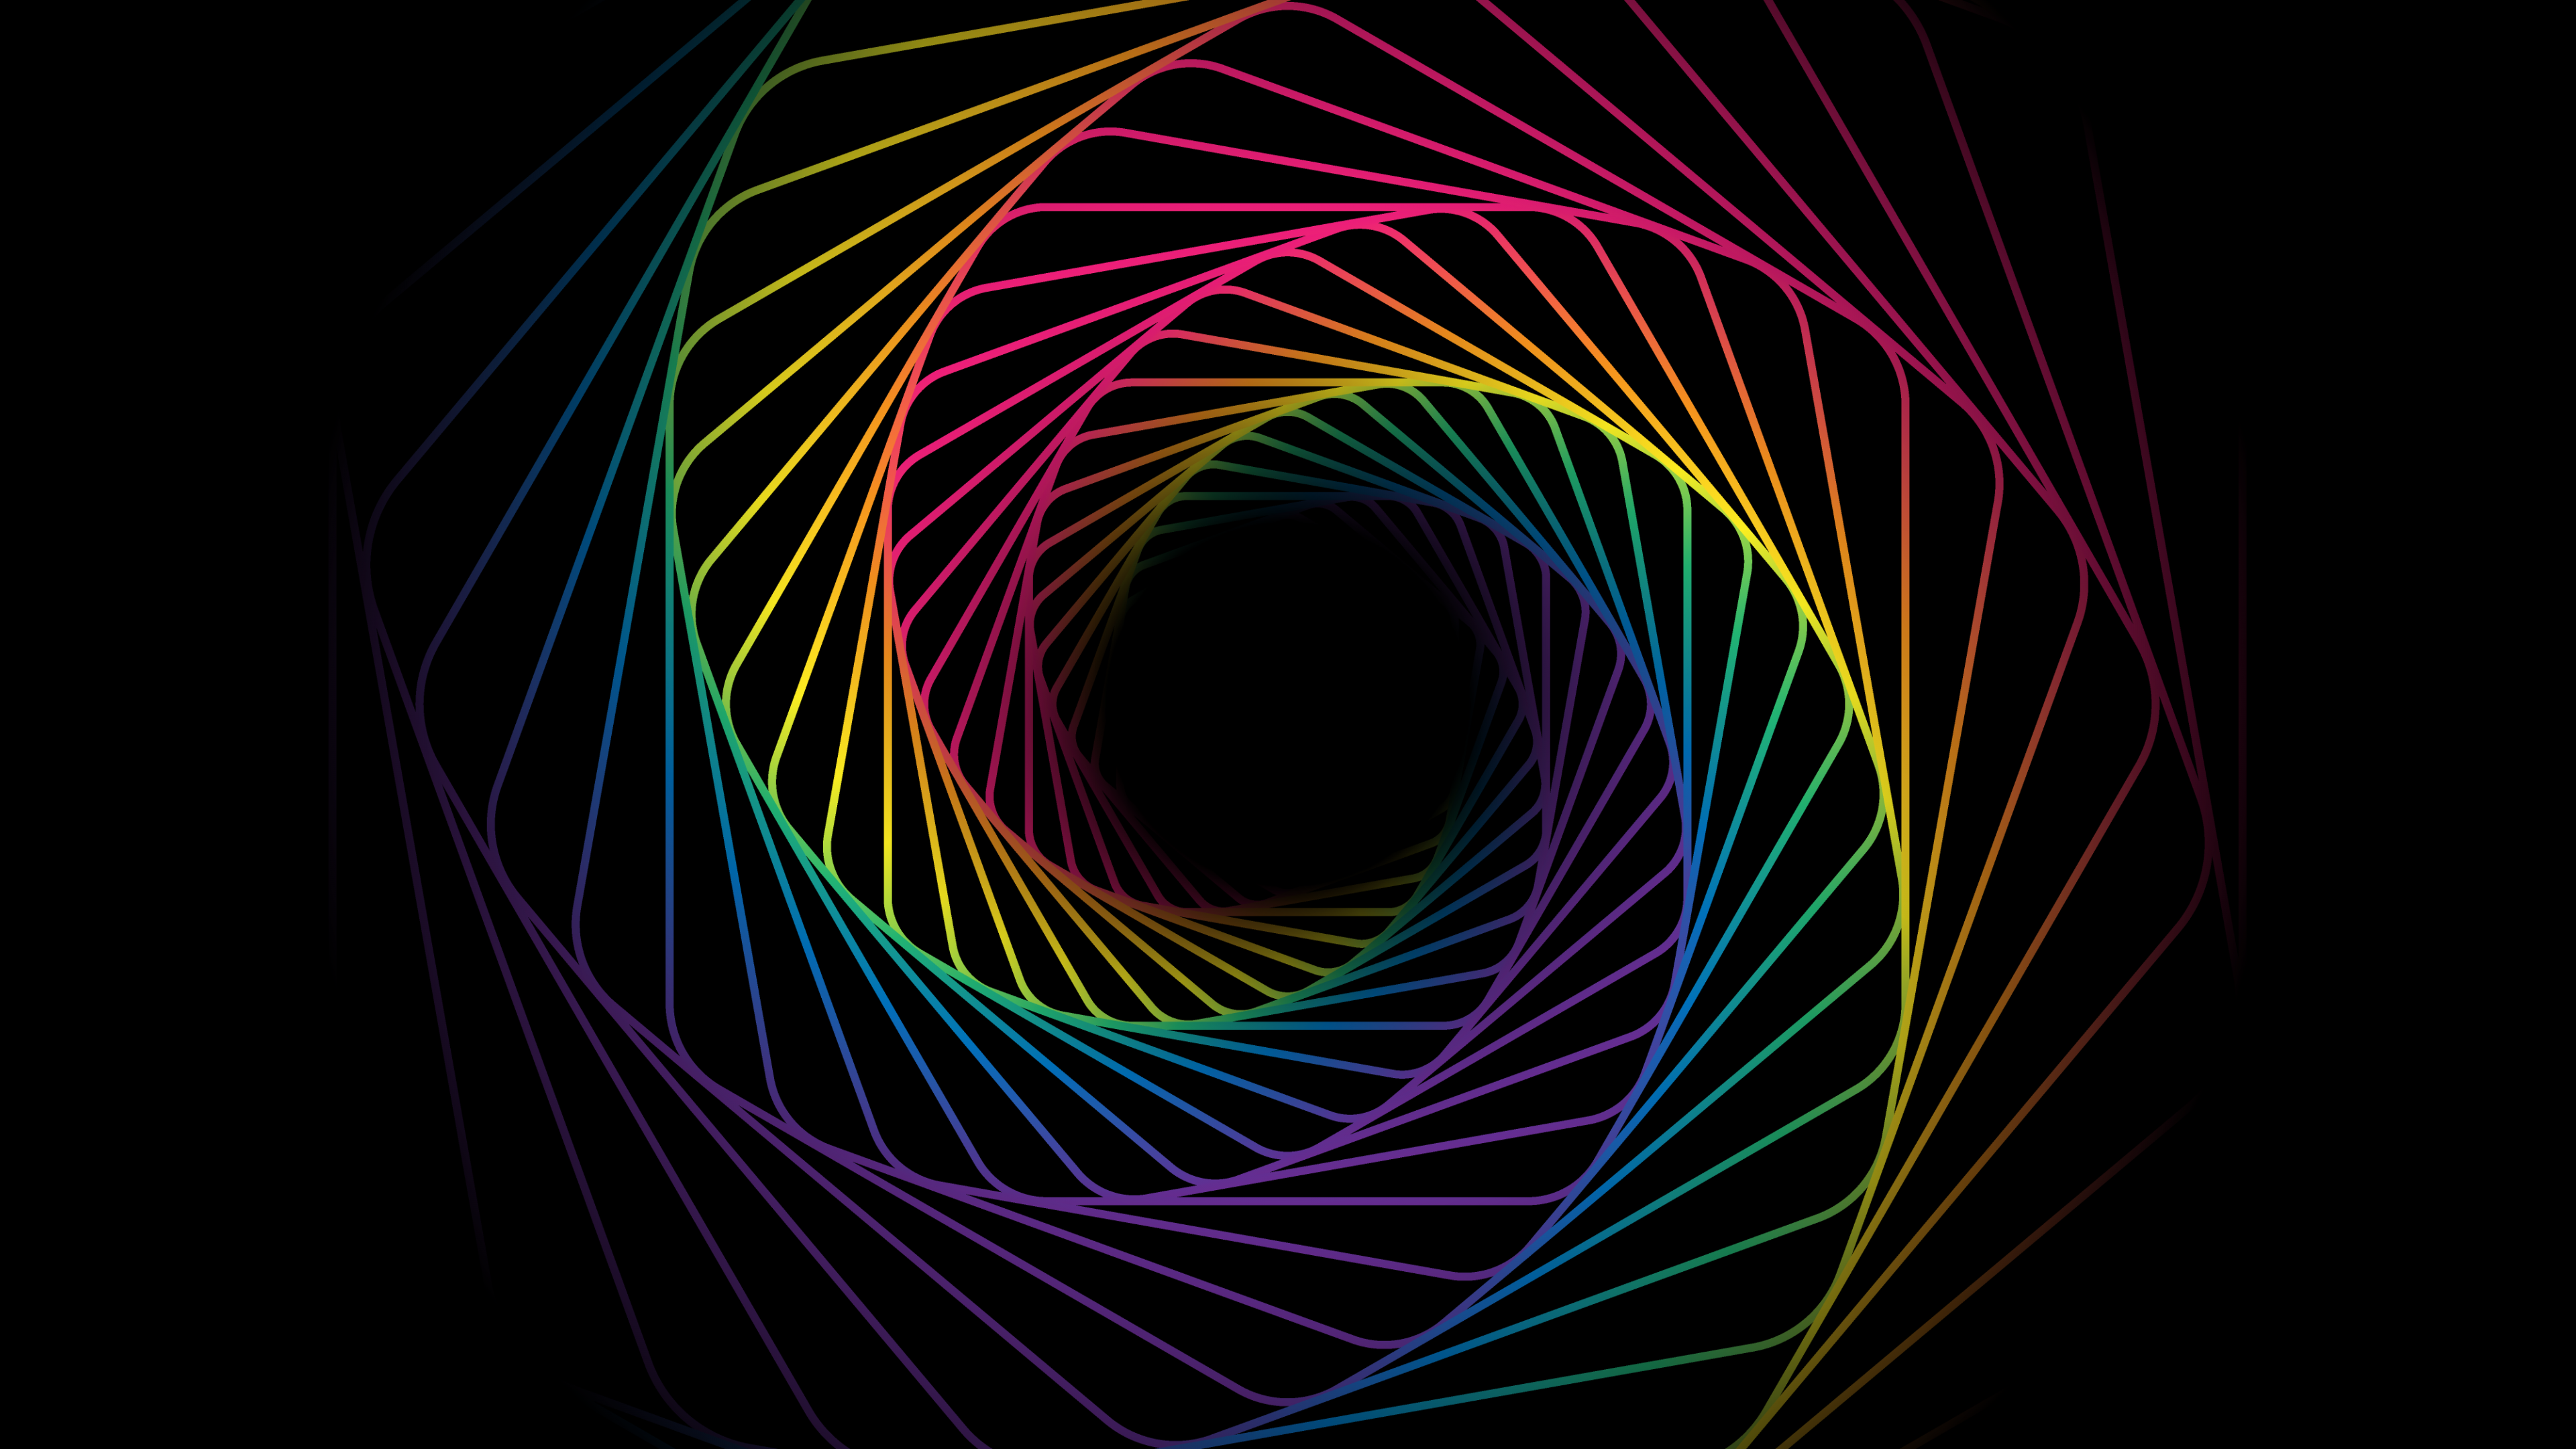 Cosmic 4K Wallpaper, Rainbow, Swirl, Spiral, Black background, Multicolor, Abstract